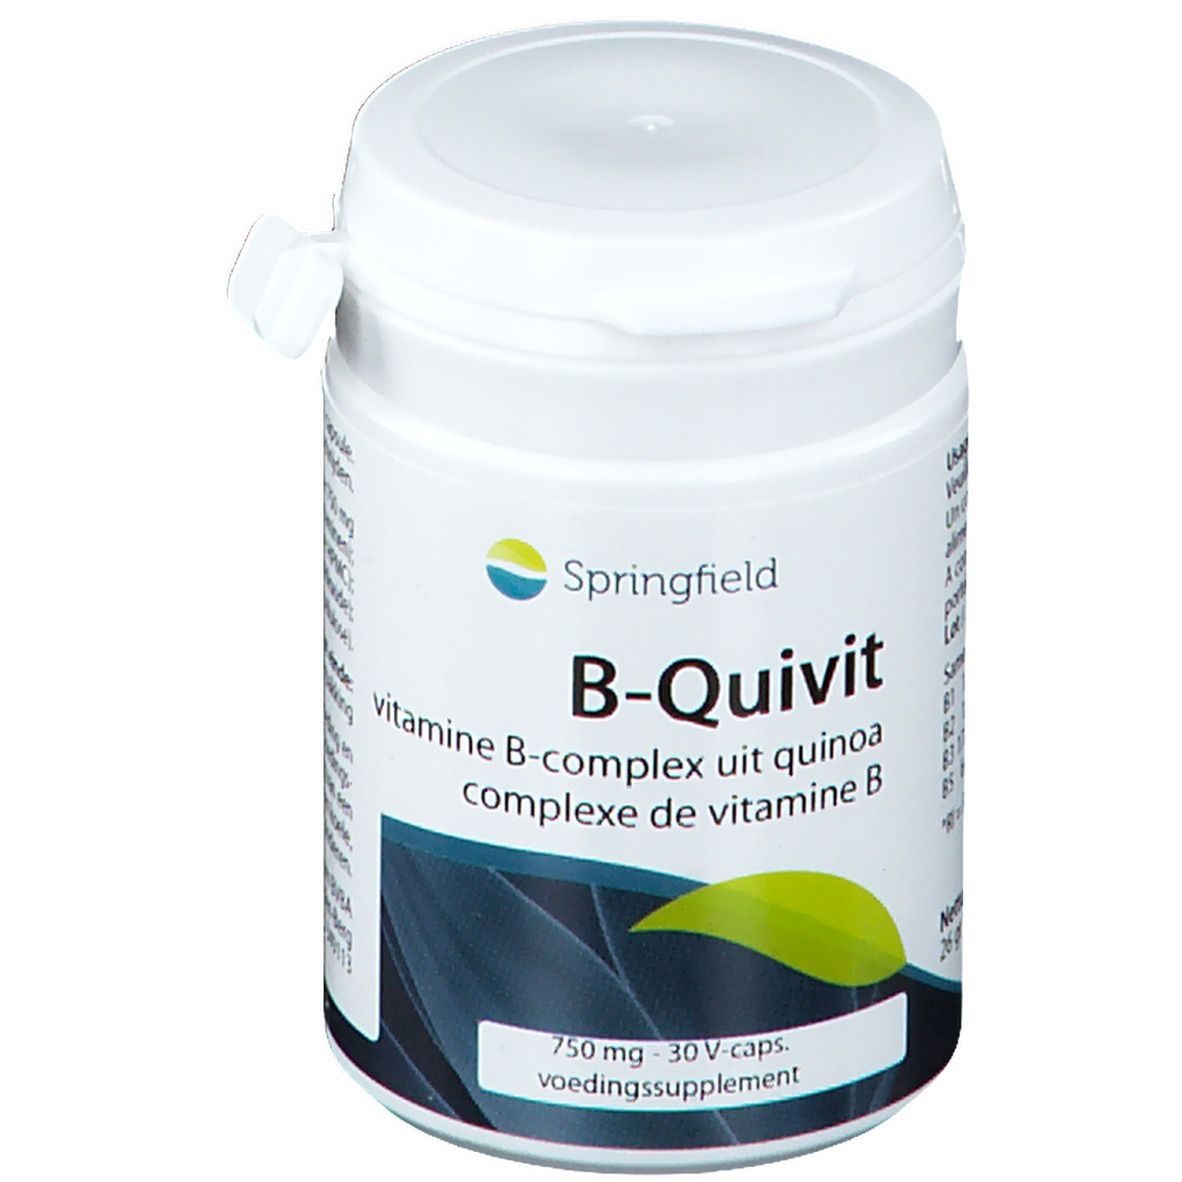 SPRINGFIELD NUTRACEUTICALS Springfield B-Quivit Vitamin B-Komplex